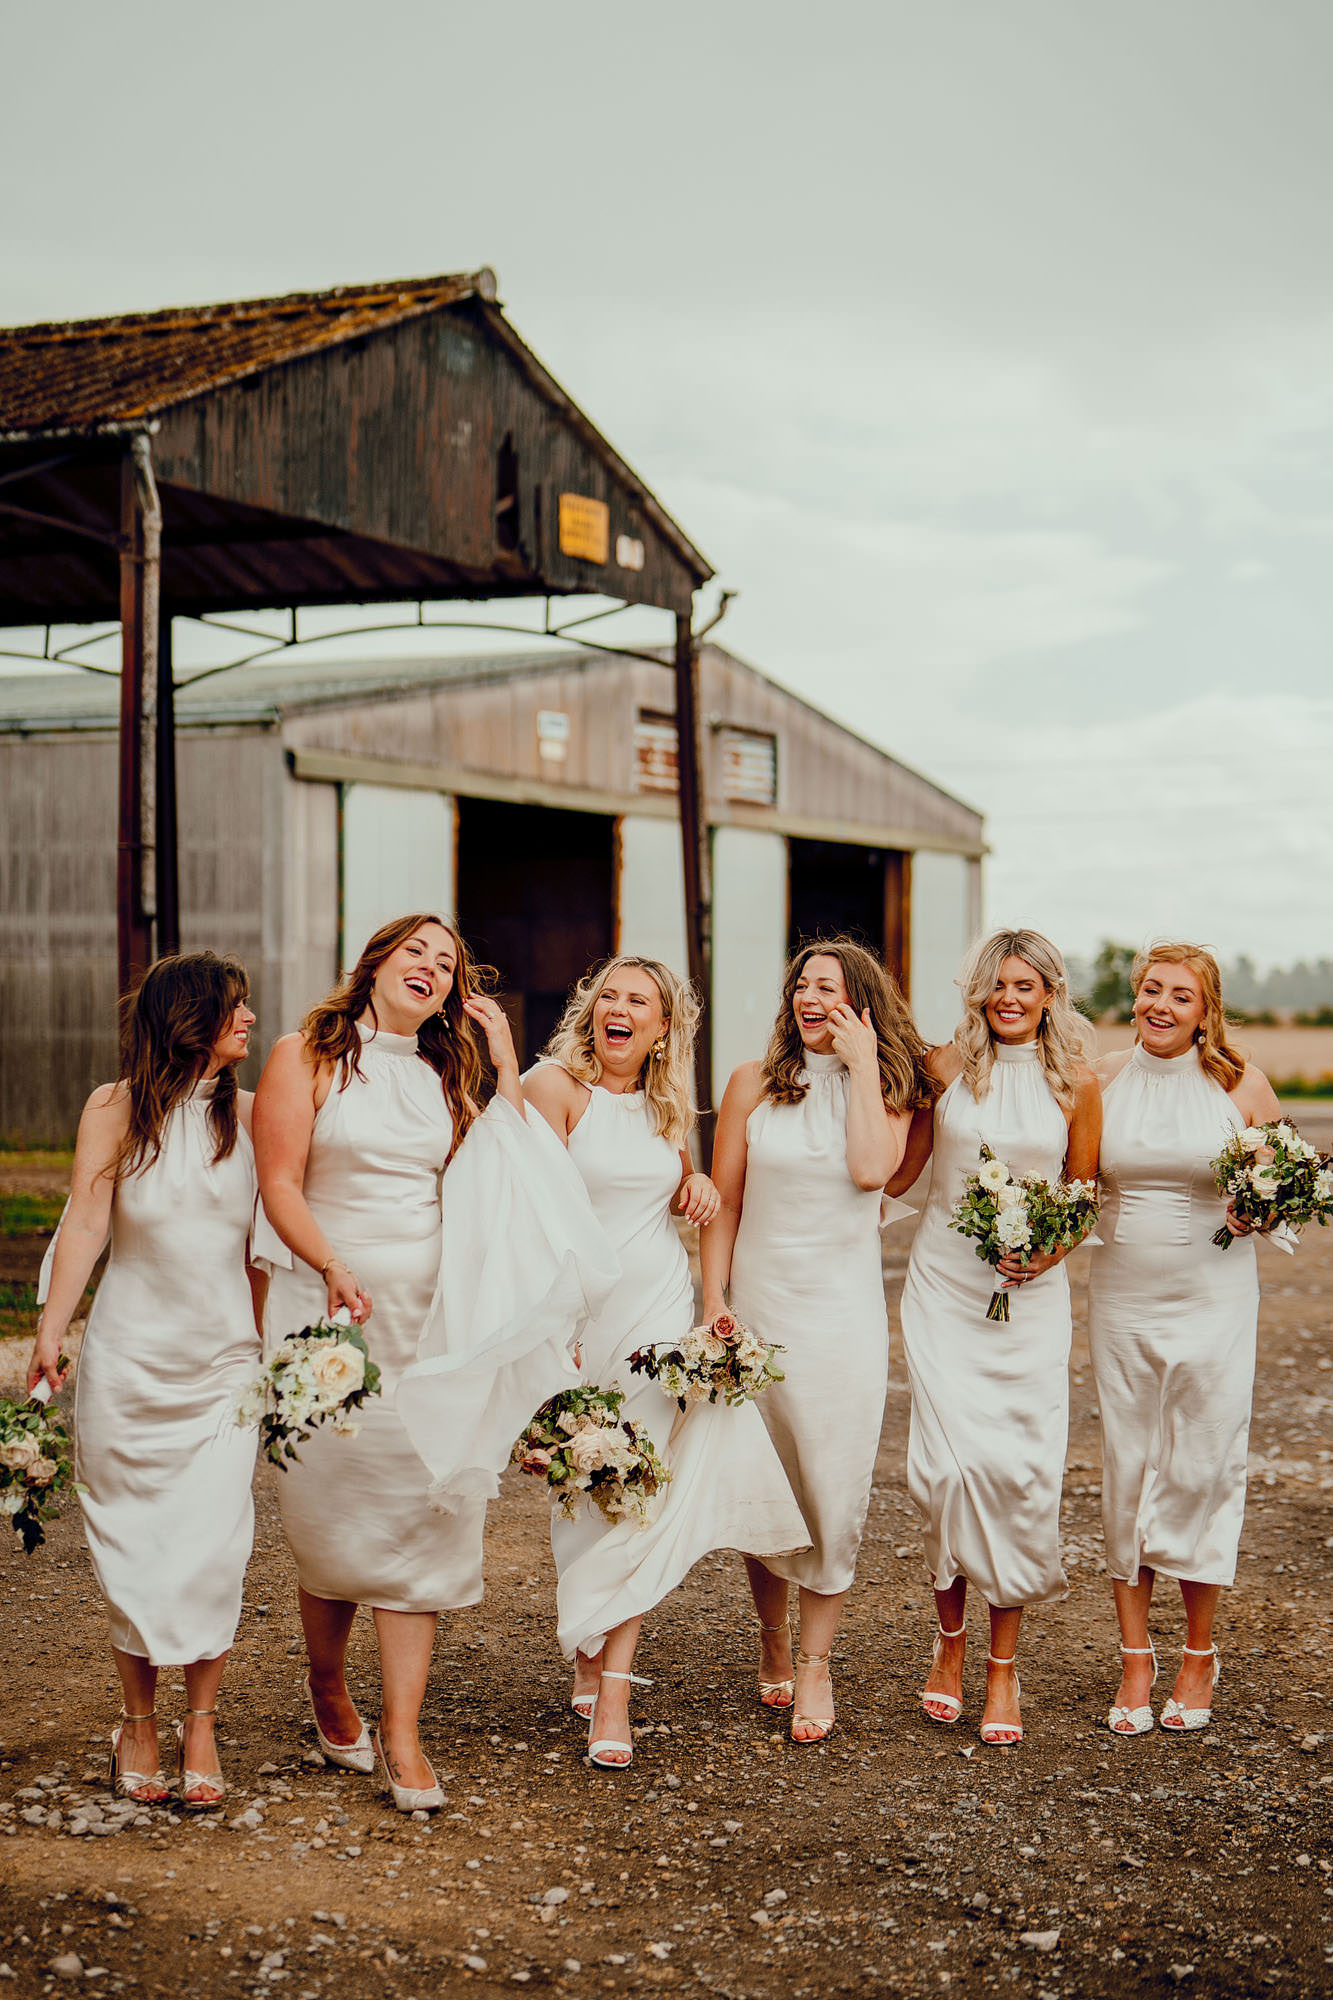 White Sykes alternative farm barn wedding venues 